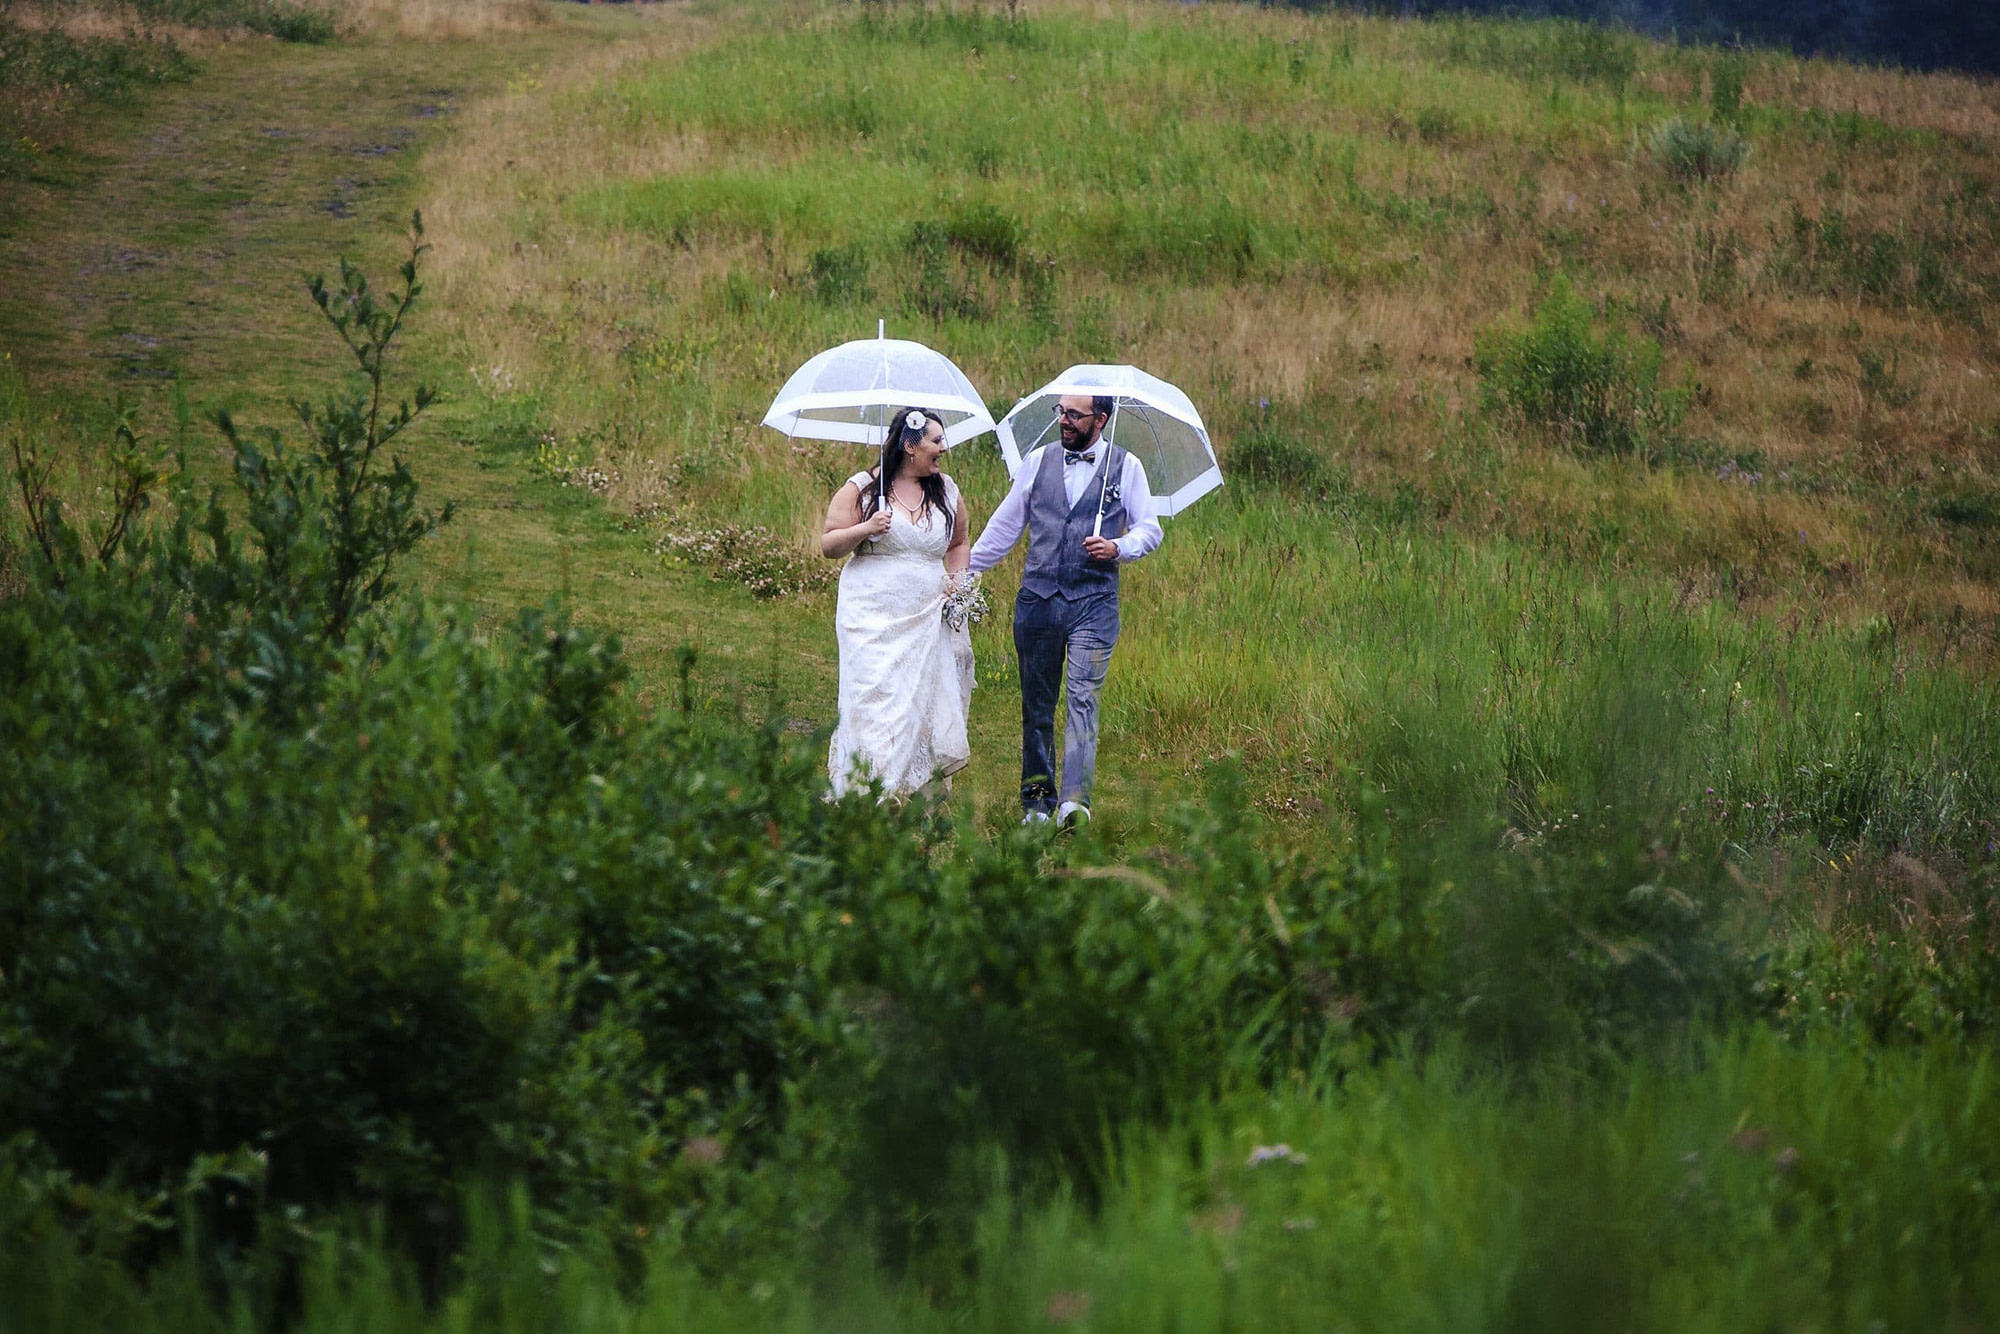 wedding couple walking in the rain with umbrellas get great wedding photos even in the rain